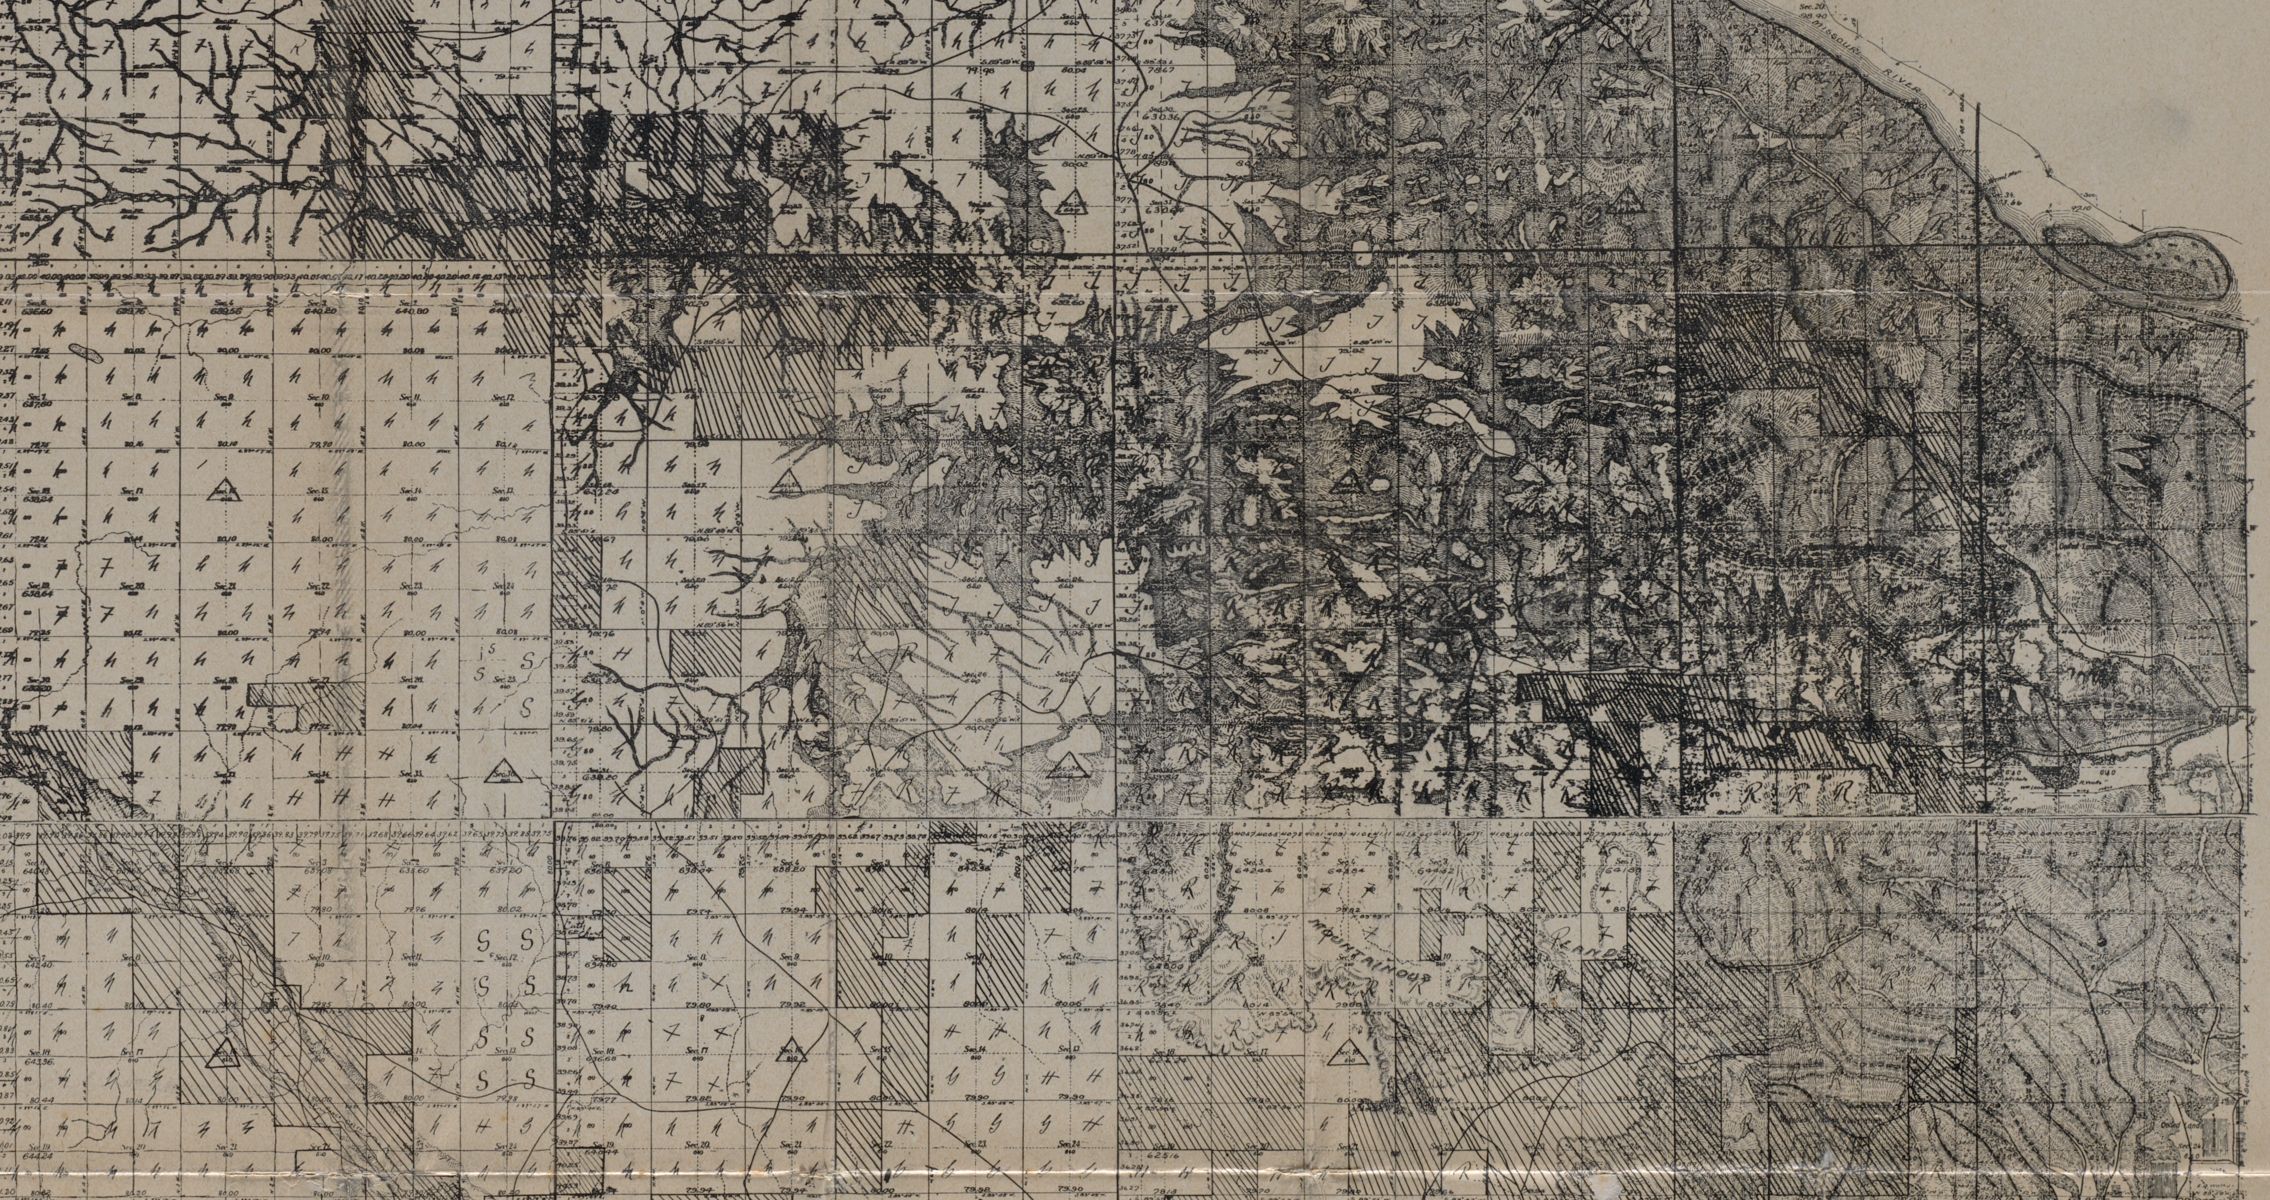 Cobb's Latest Map of the Rosebud Reservation, South Dakota, to Be Opened for Settlement Aug. 8, 1904